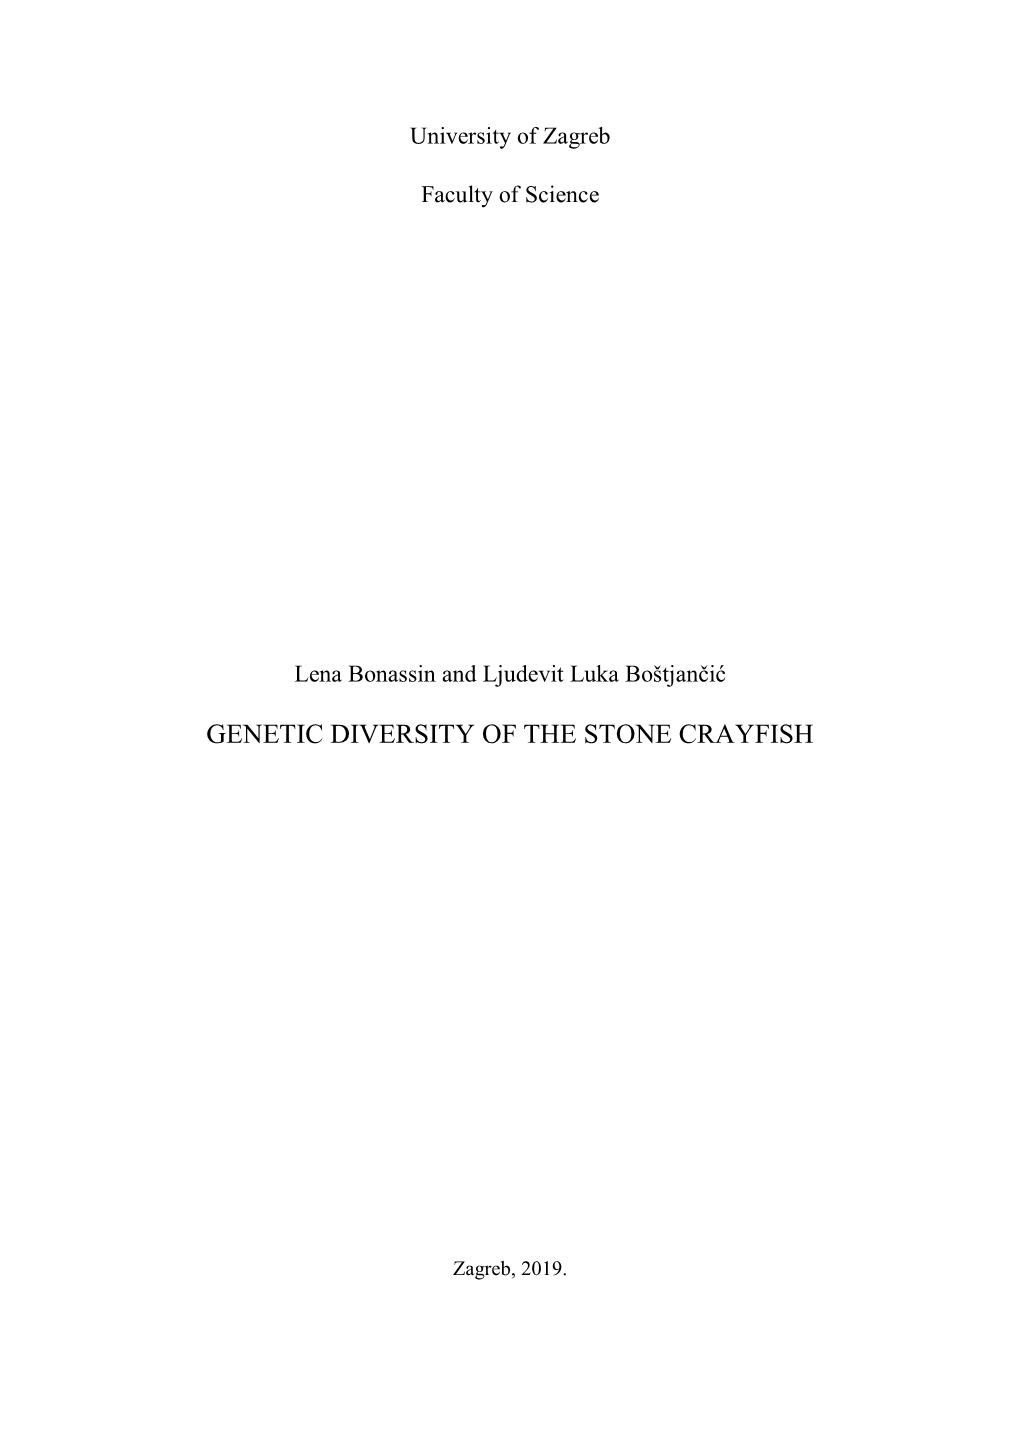 Genetic Diversity of the Stone Crayfish